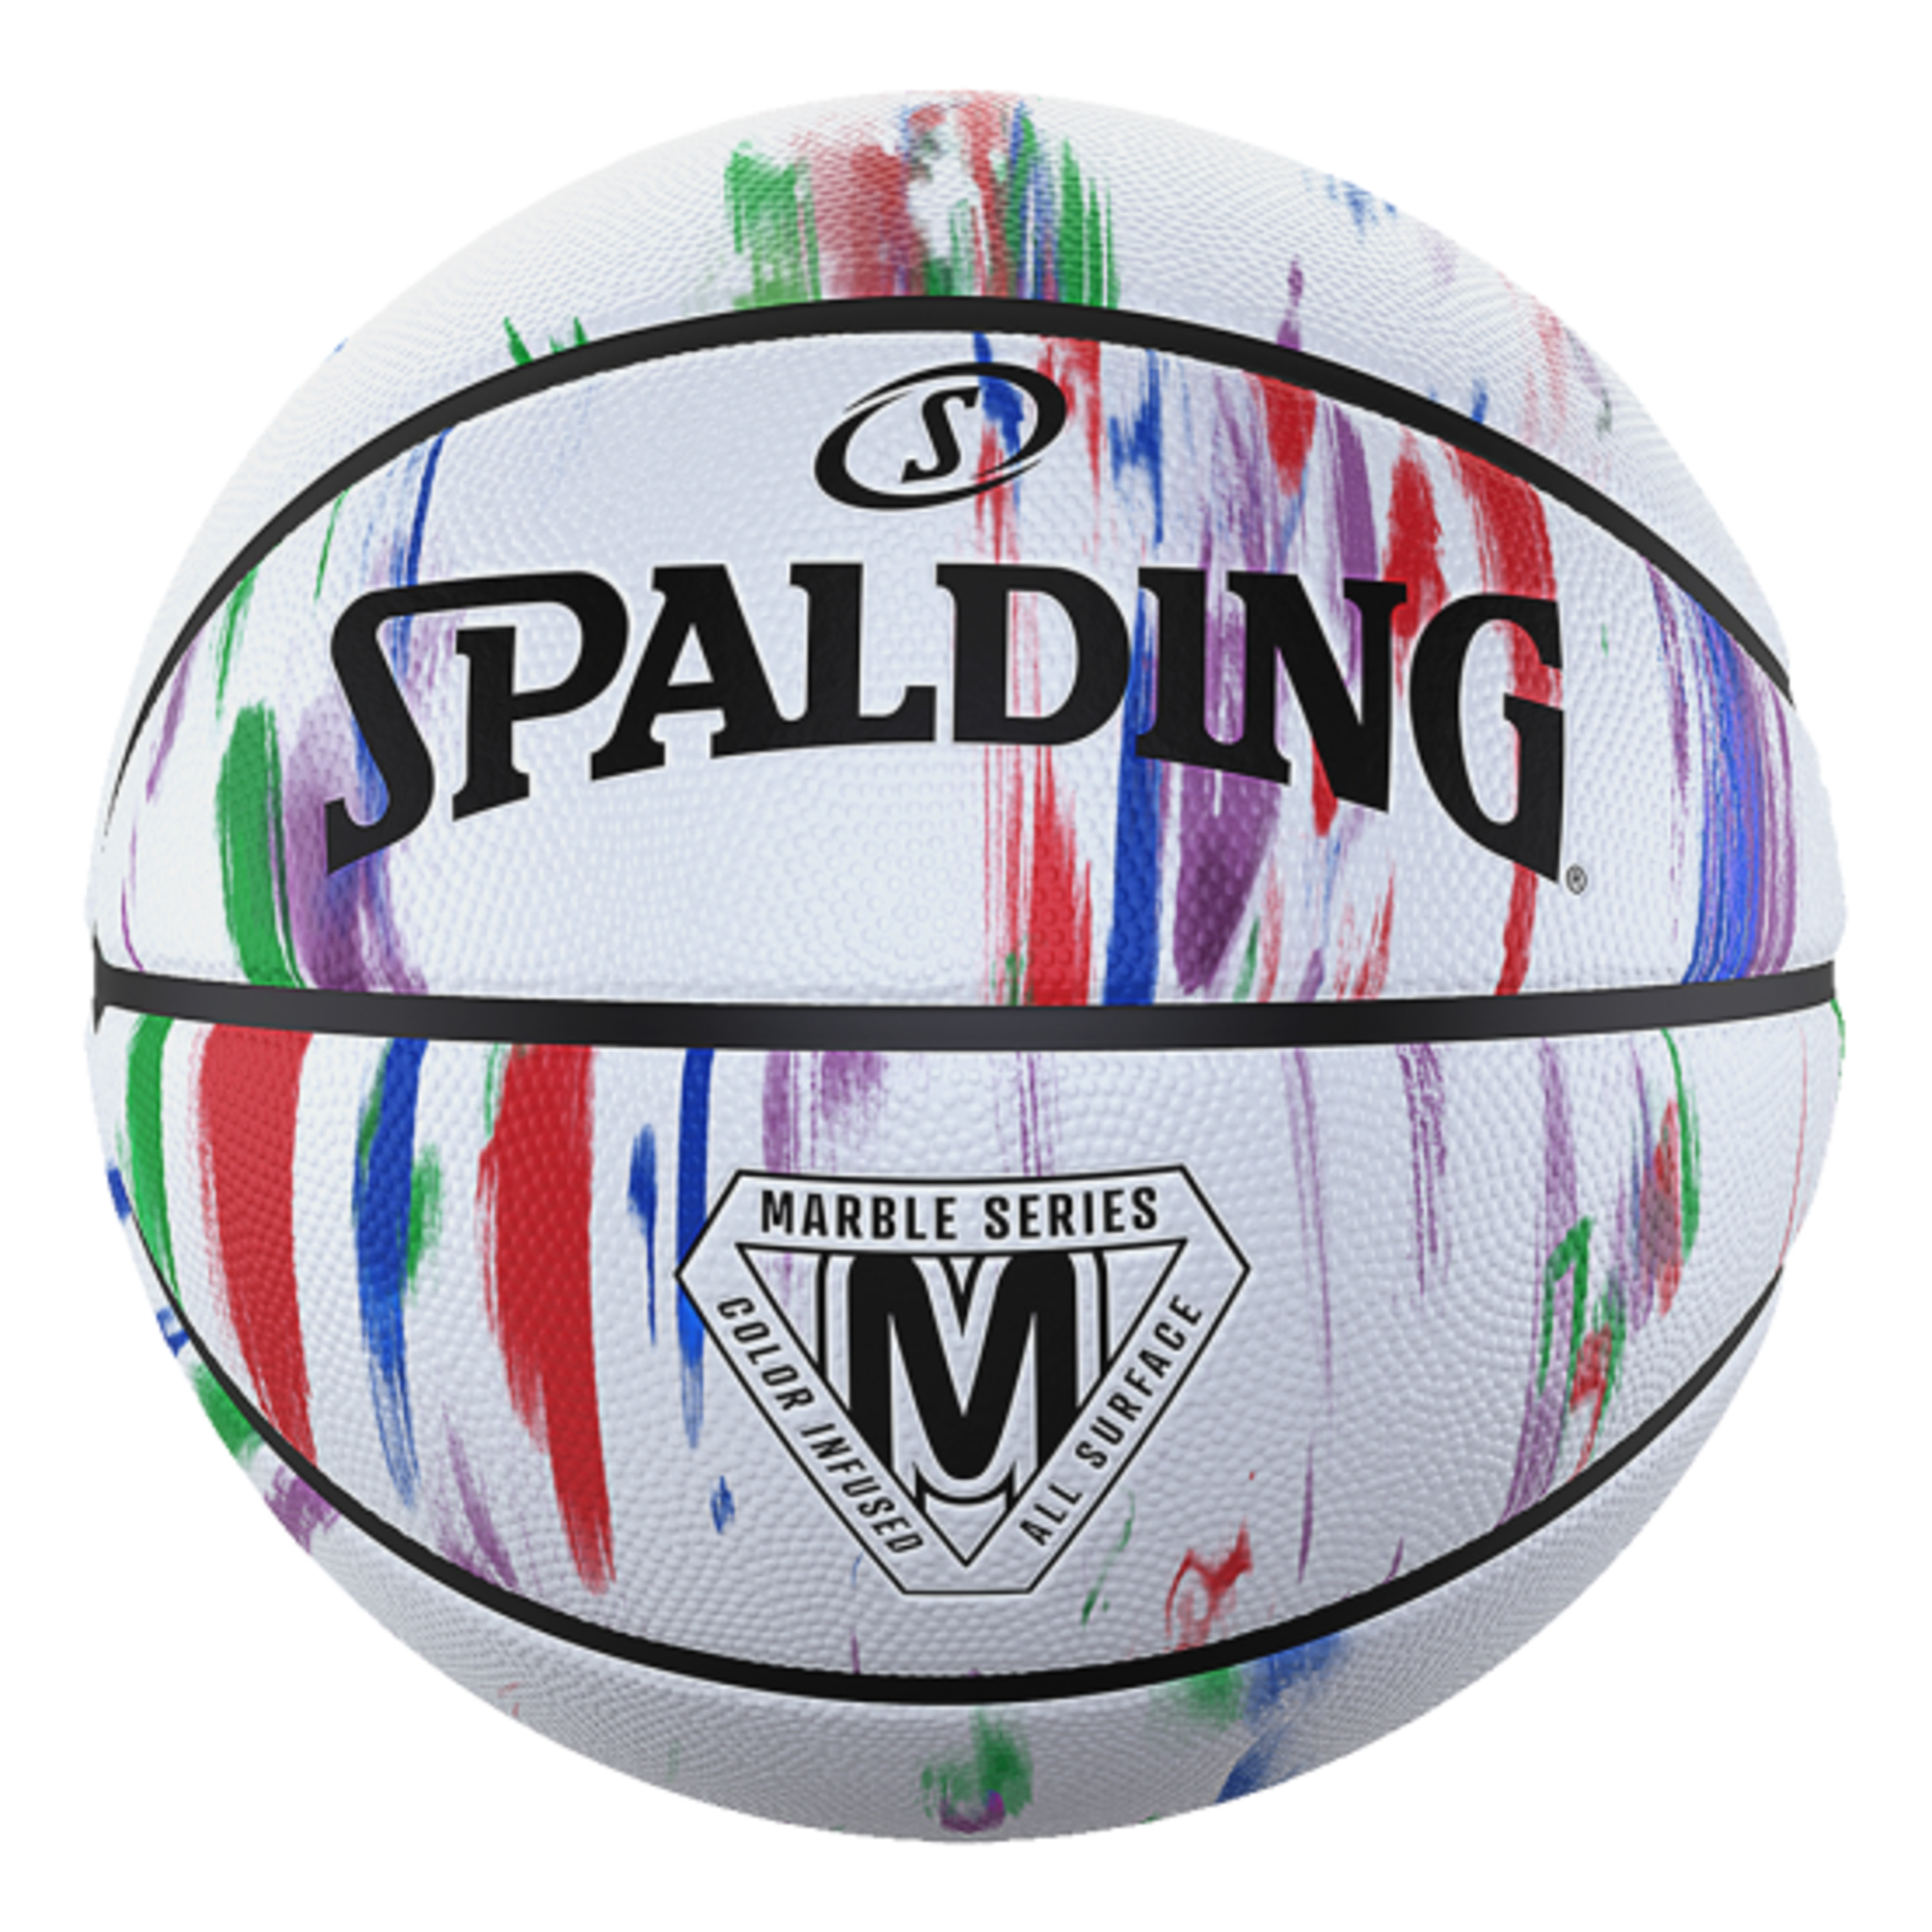 Basquetebol Spalding Marble Series Rainbow Sz7 - multicolor - 